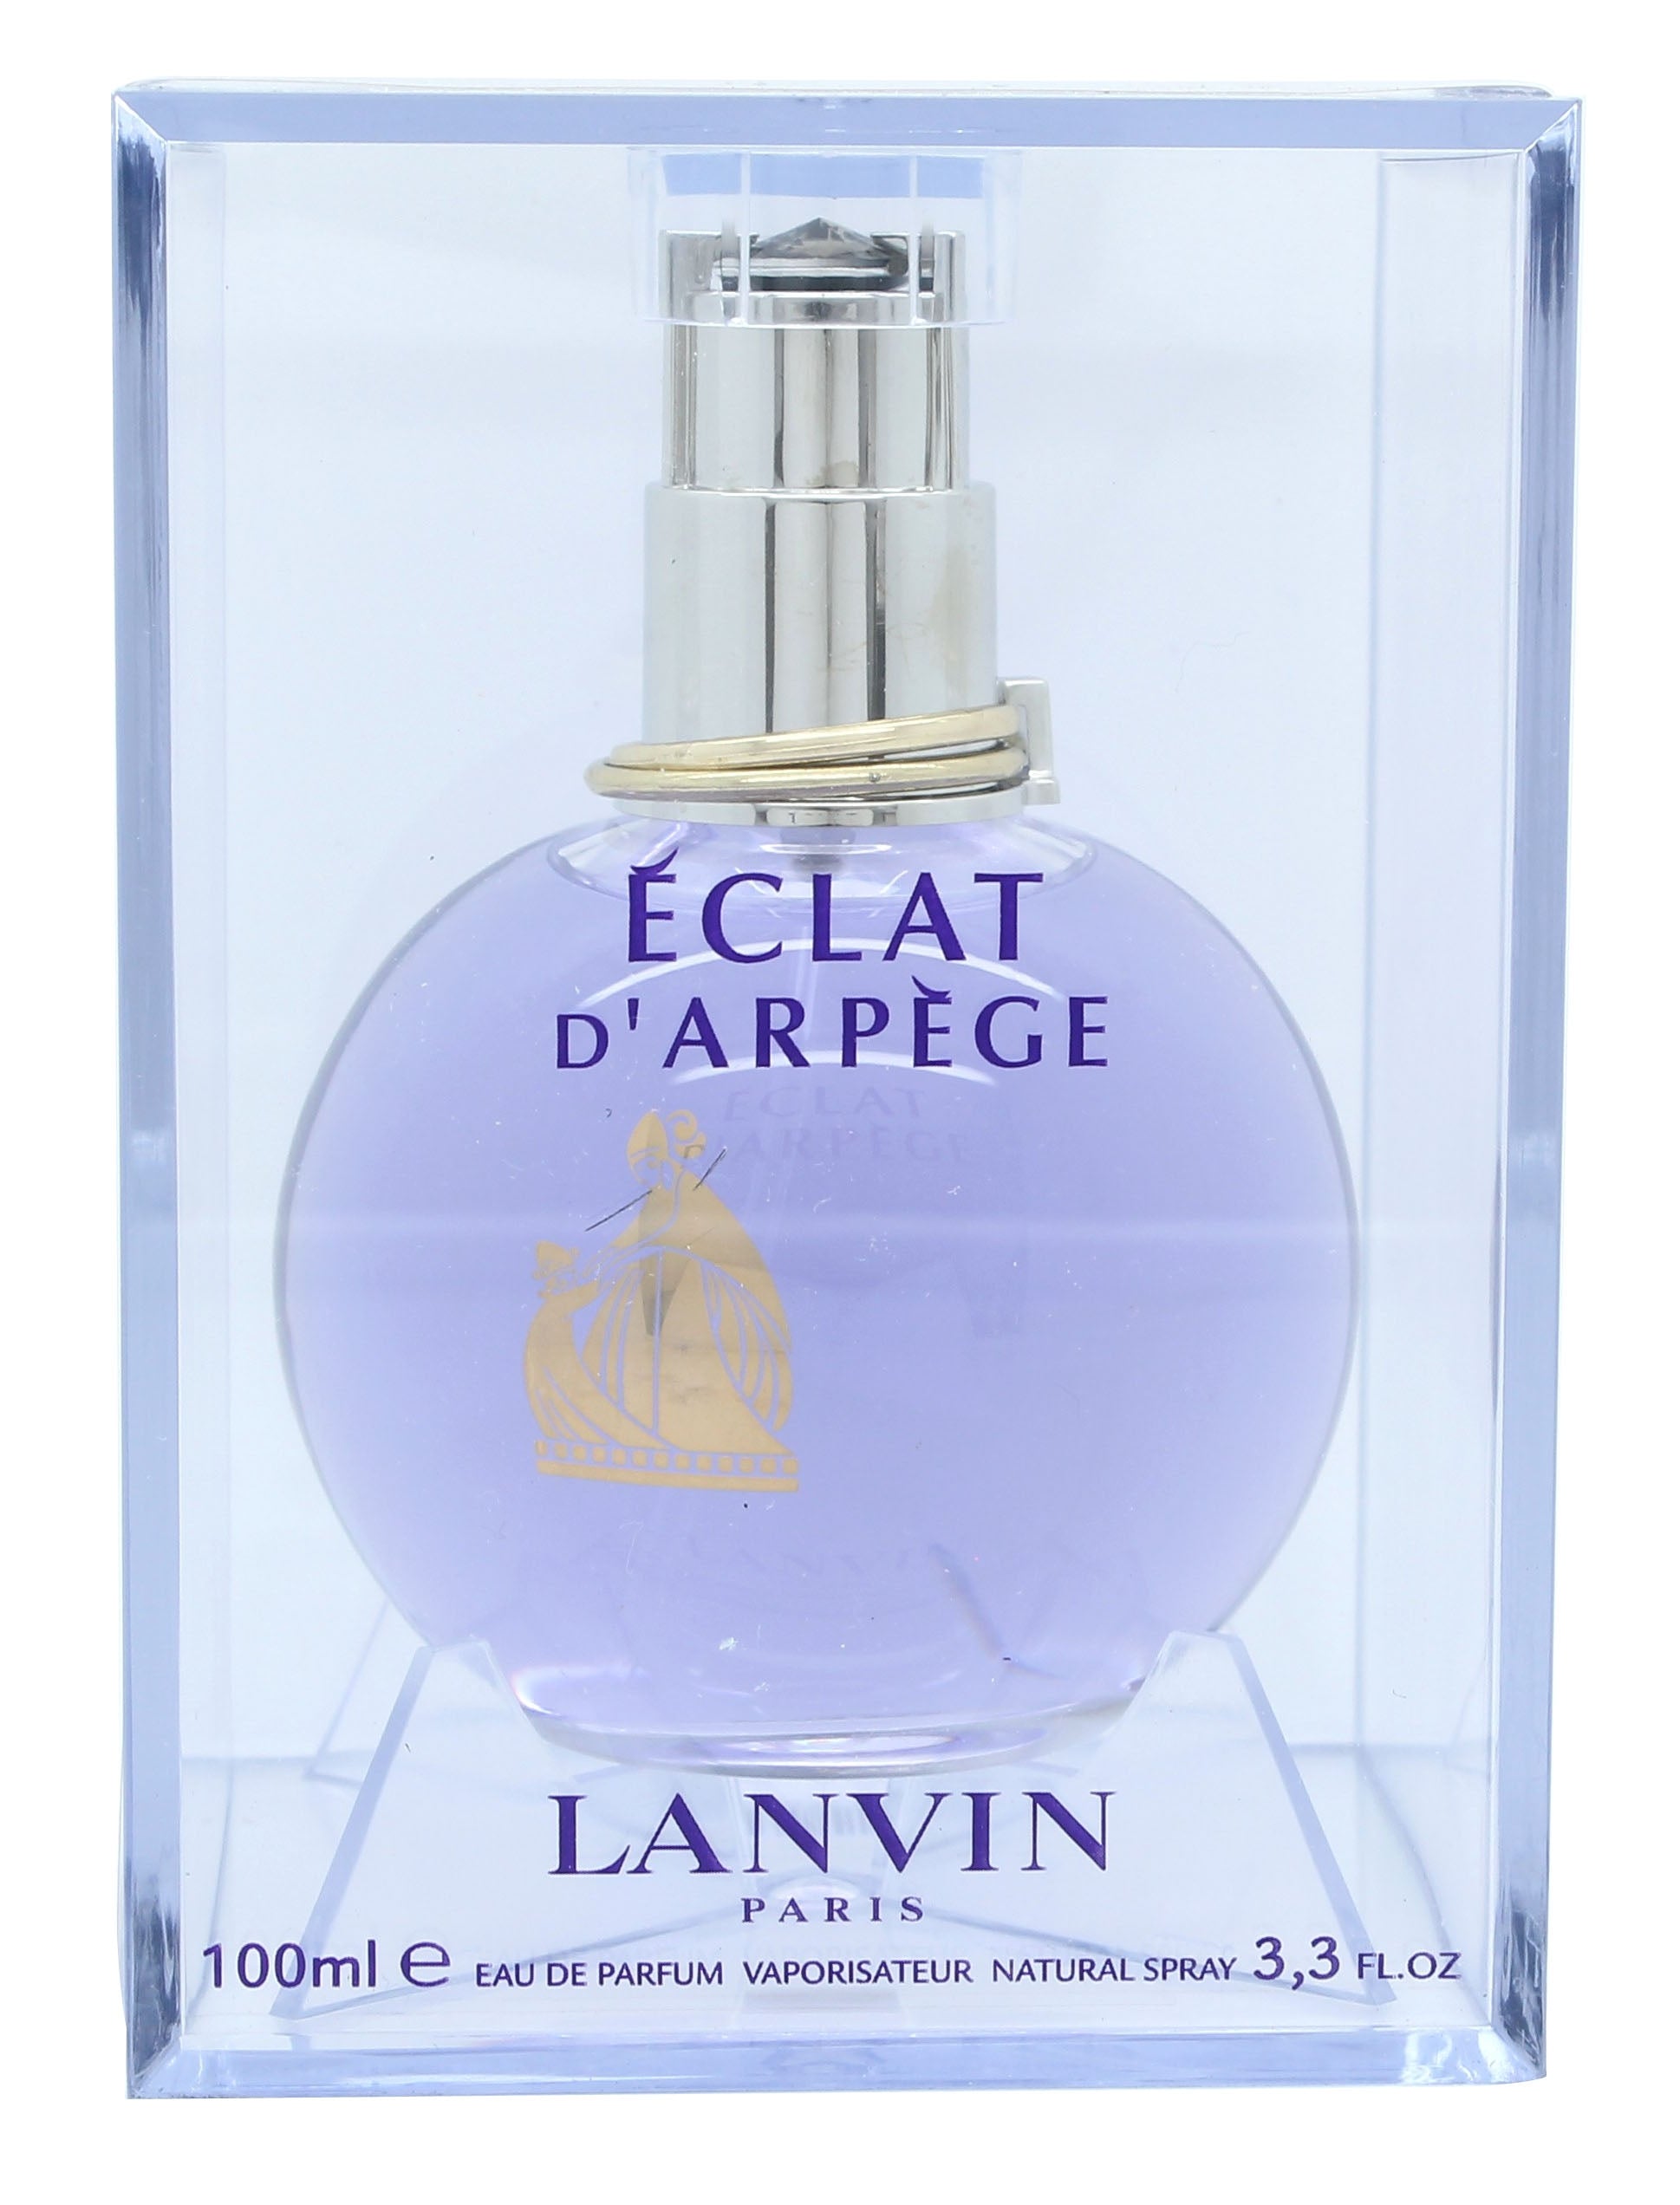 View Lanvin Eclat Arpege Eau de Parfum 100ml Spray information